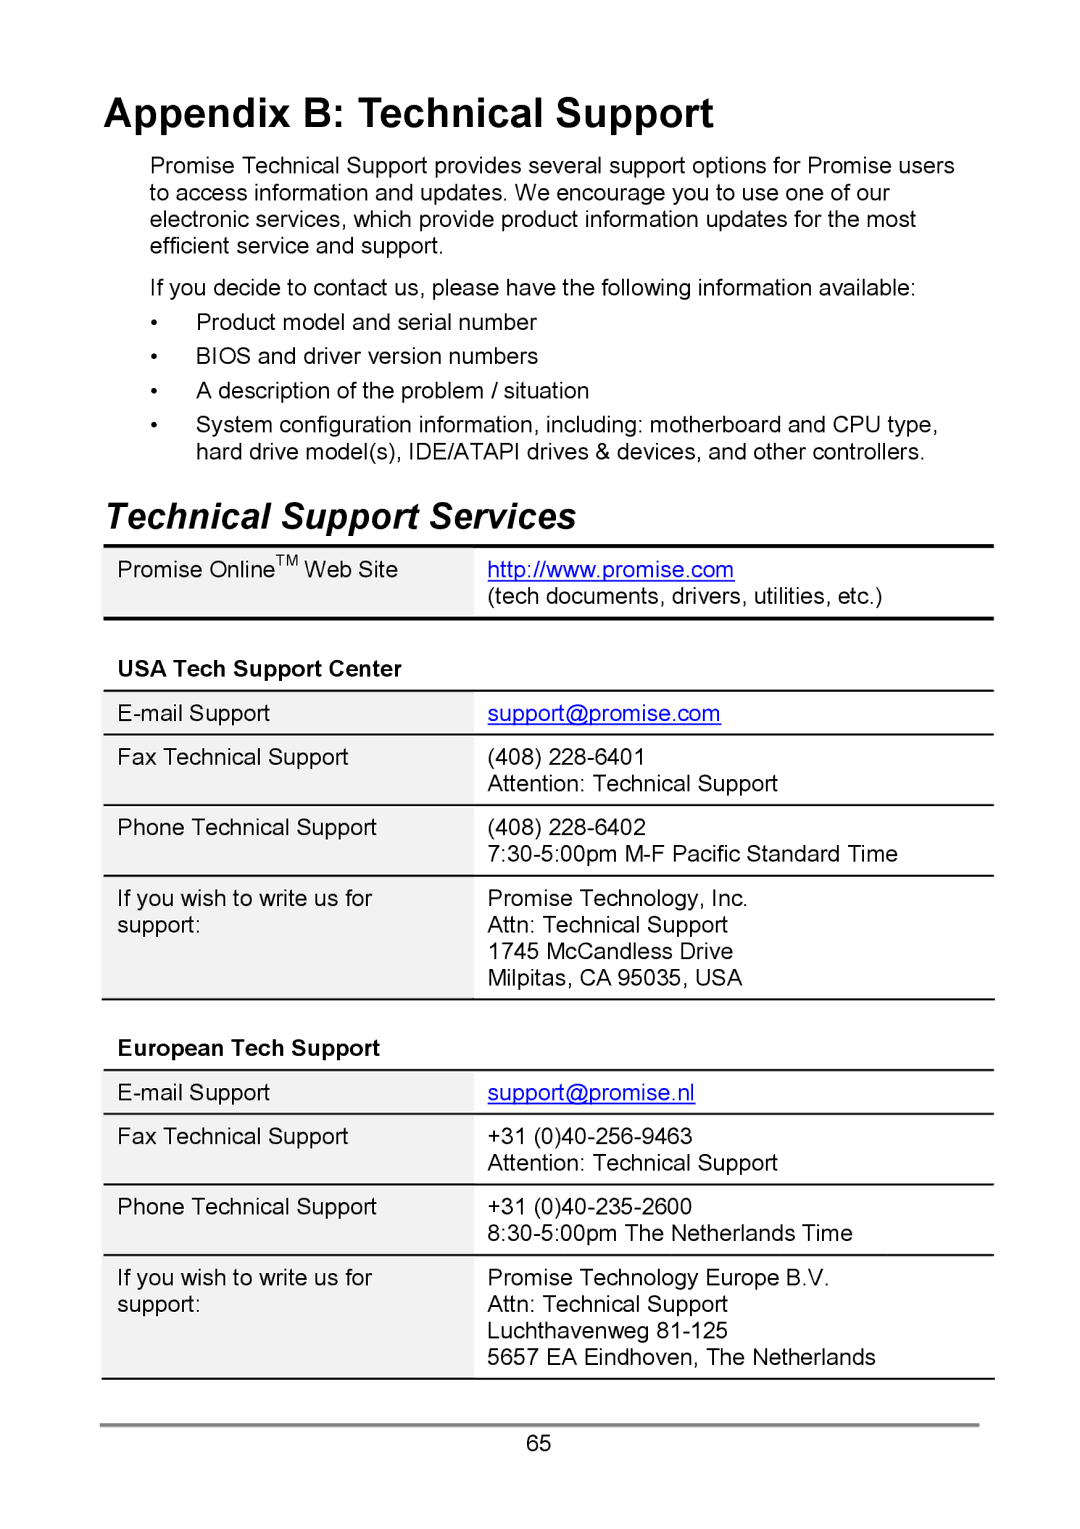 Promise Technology S150 user manual Appendix B Technical Support, Technical Support Services, USA Tech Support Center 